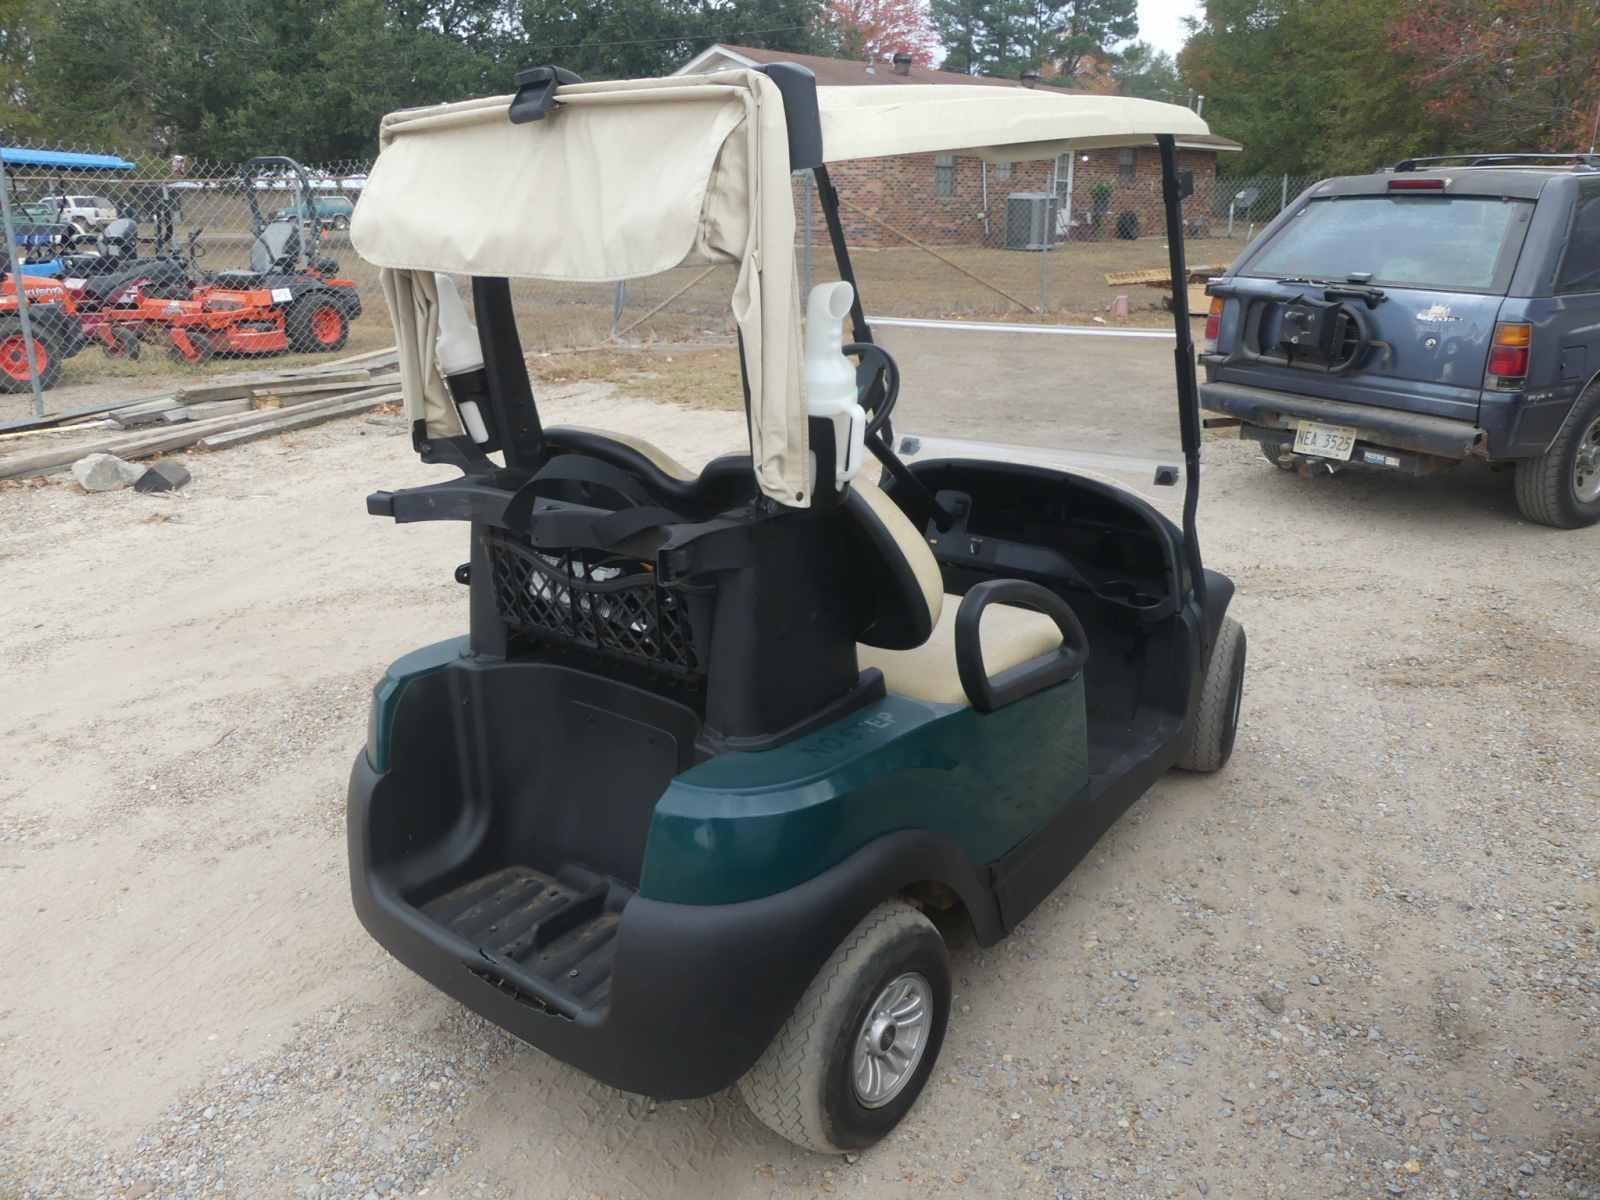 2019 Club Car Precedent Electric Golf Cart, s/n JE1945-024521 (No Title): w